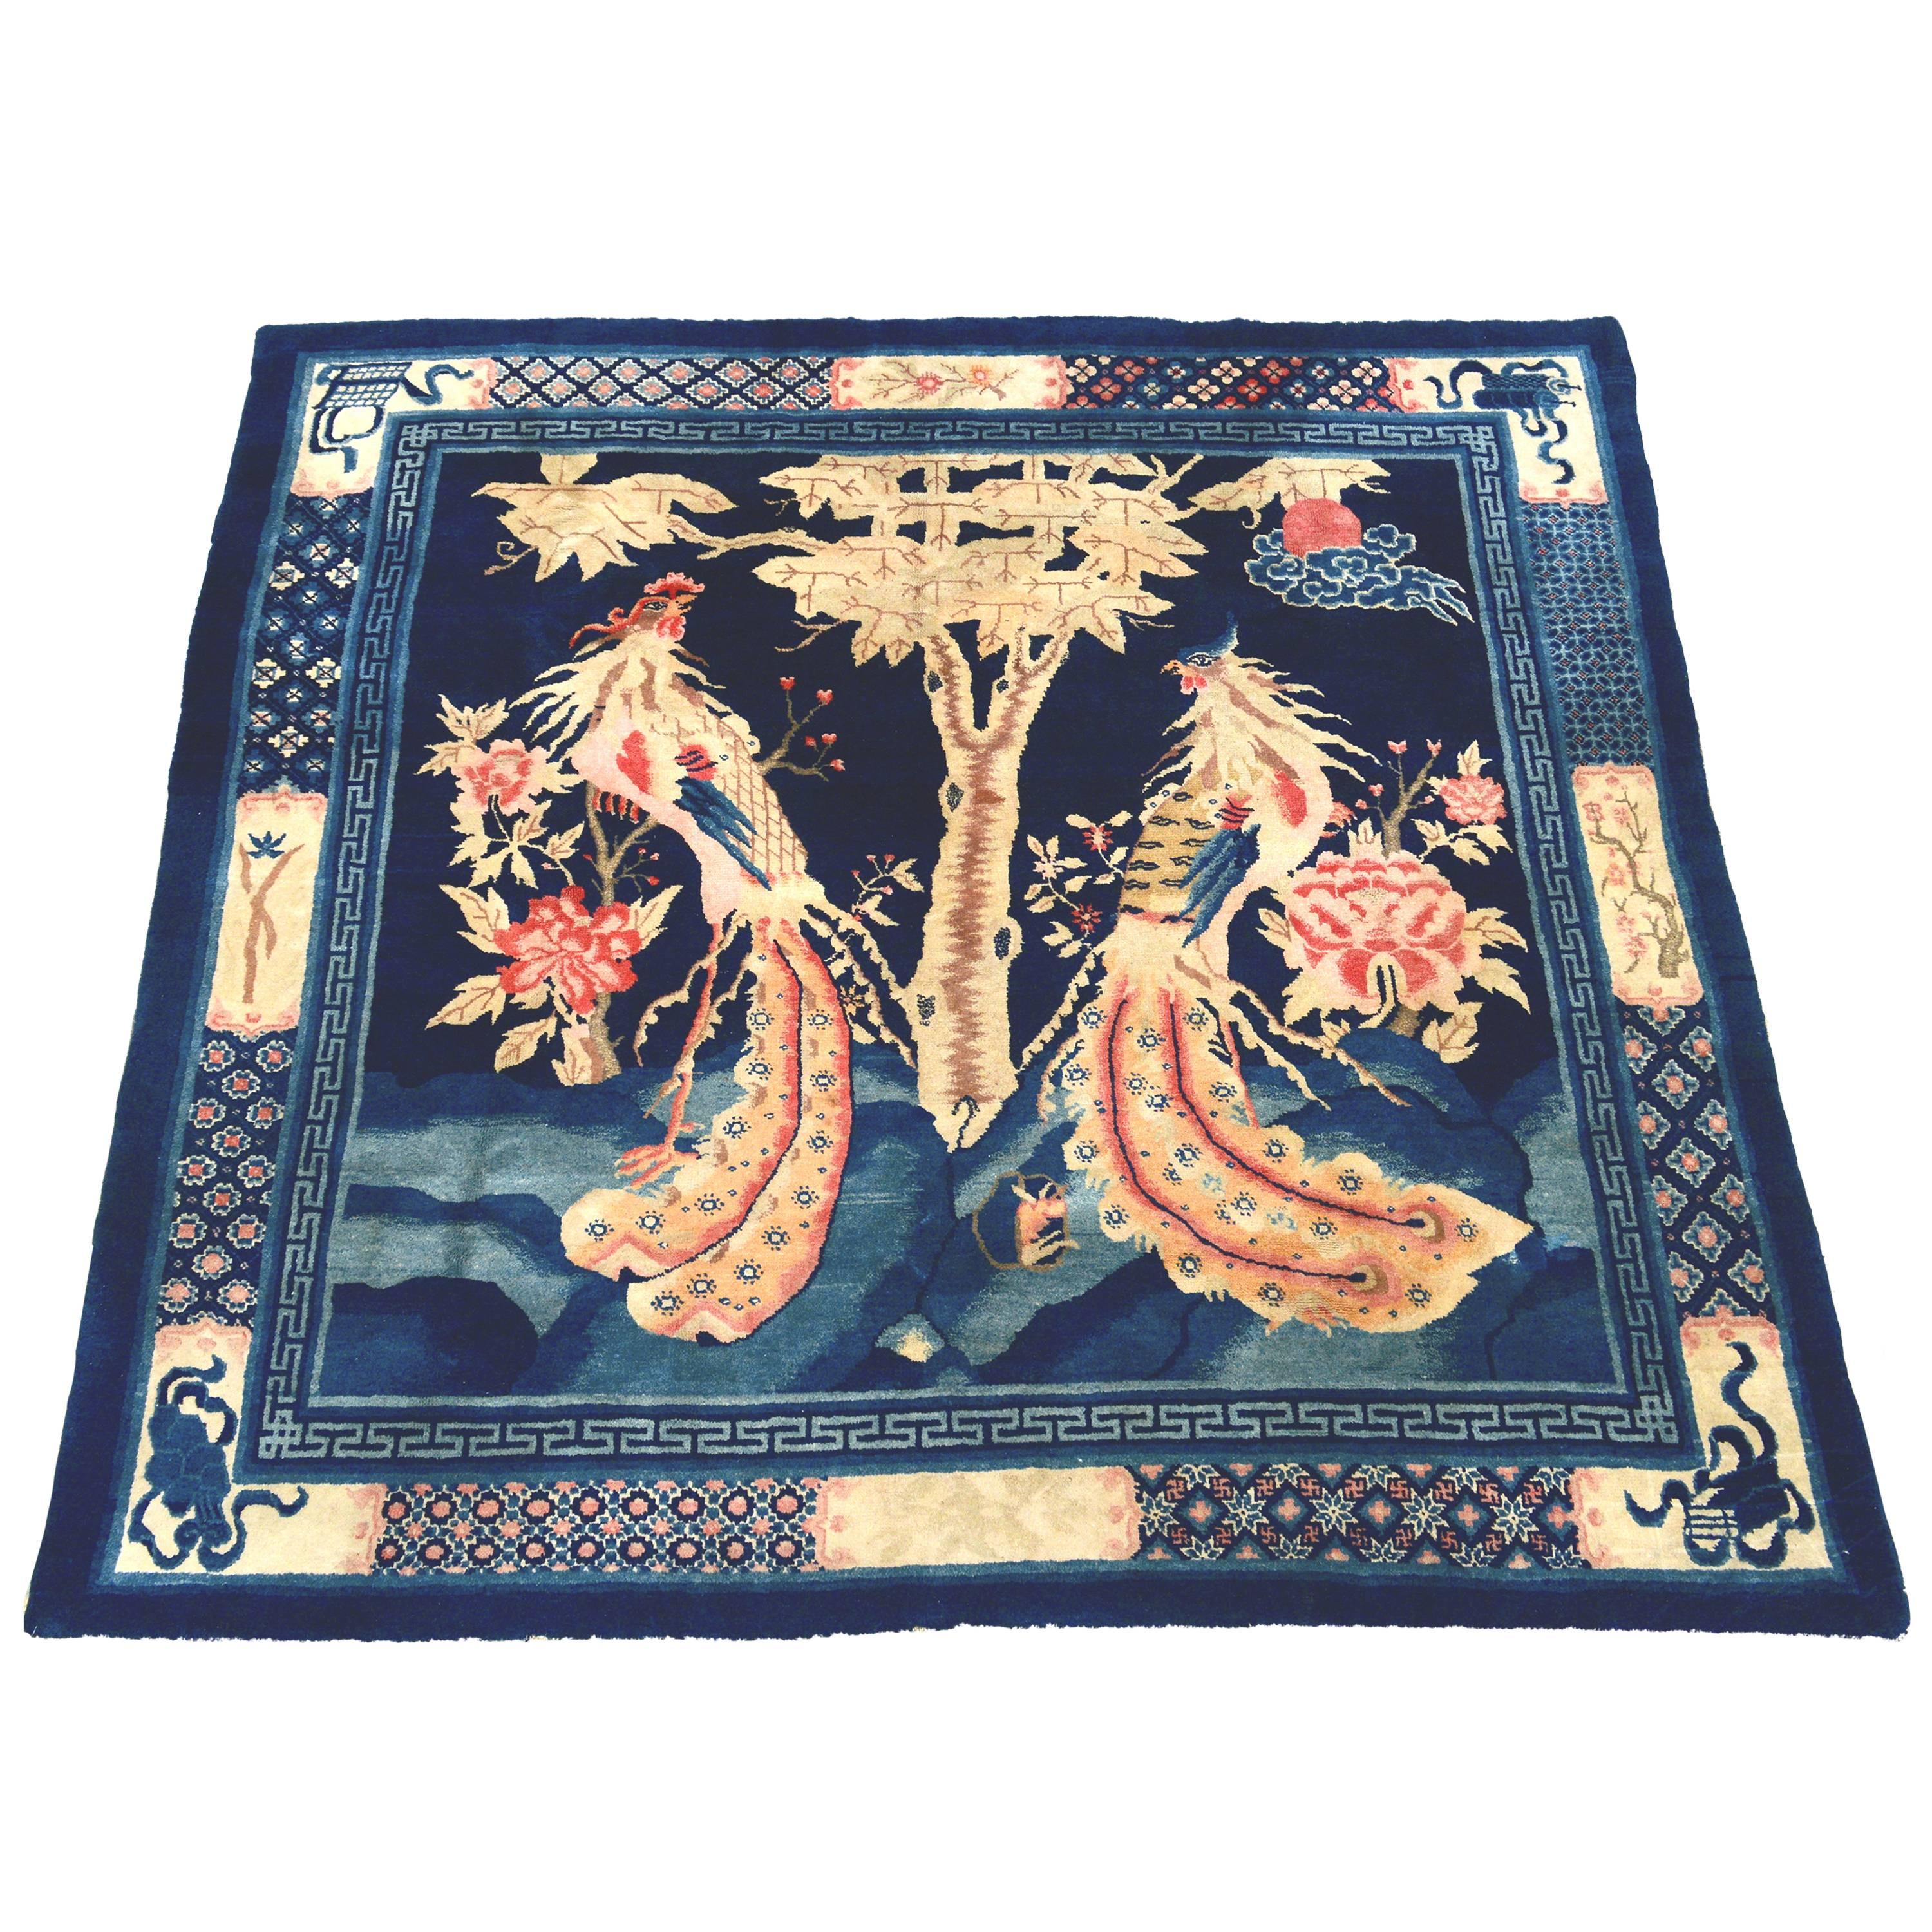 Antique Blue 19th Century Peking Chinese Ceremonial Carpet with Phoenix Birds